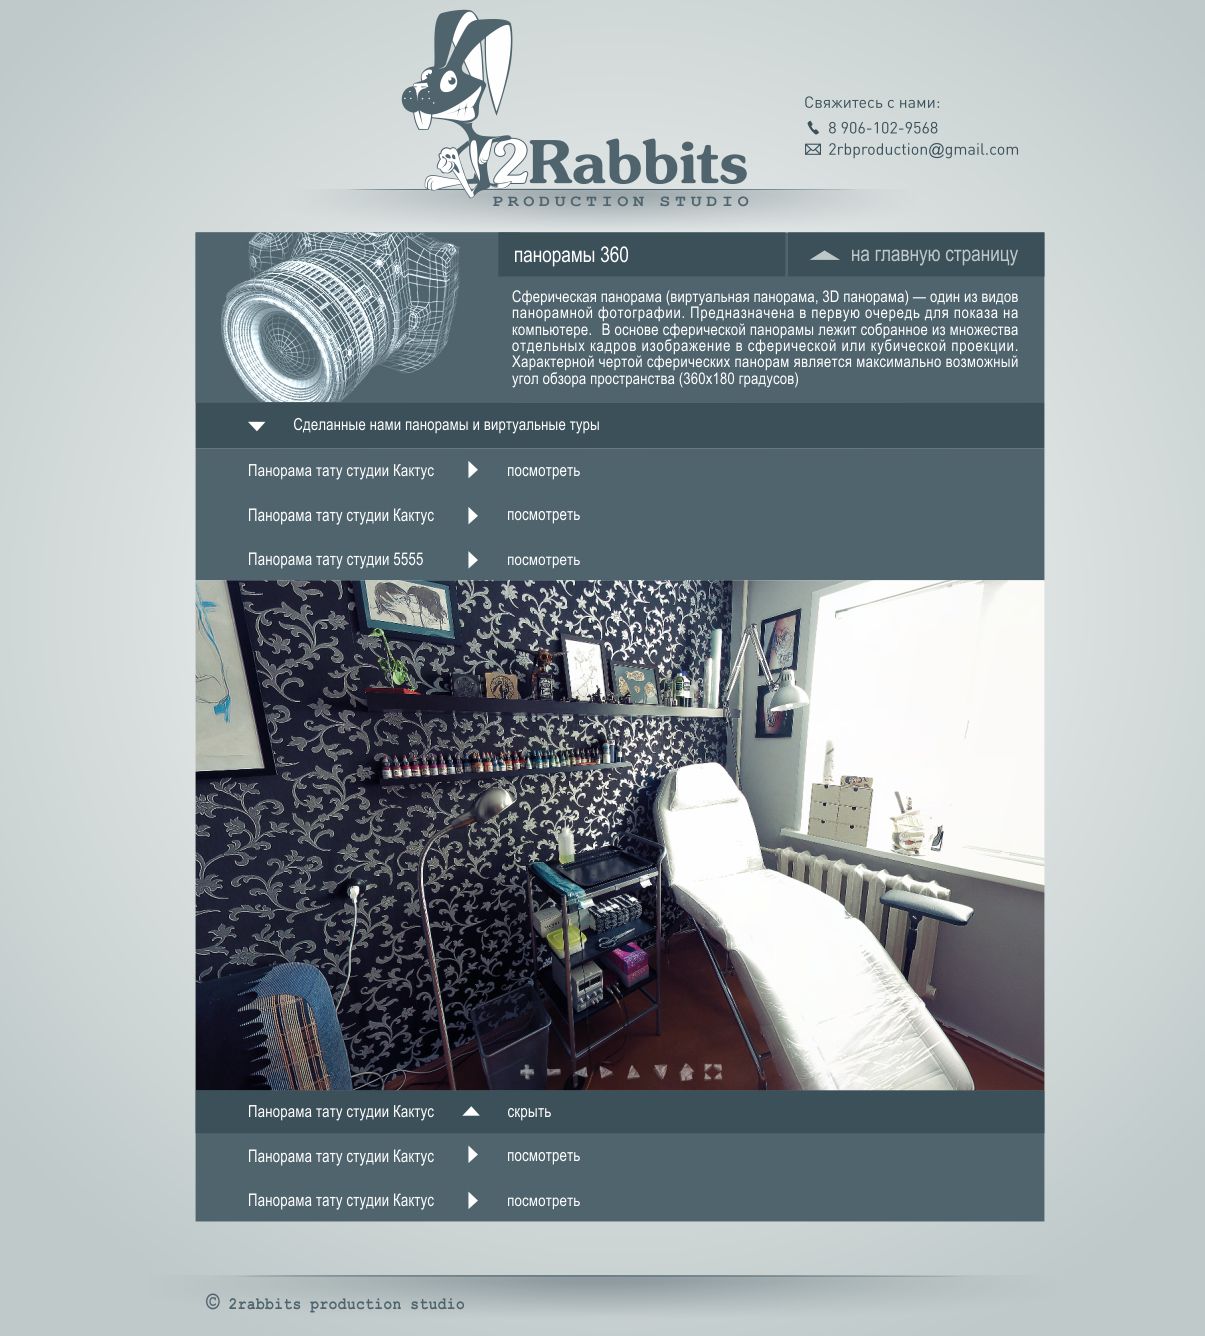 сайт студии 2rabbits